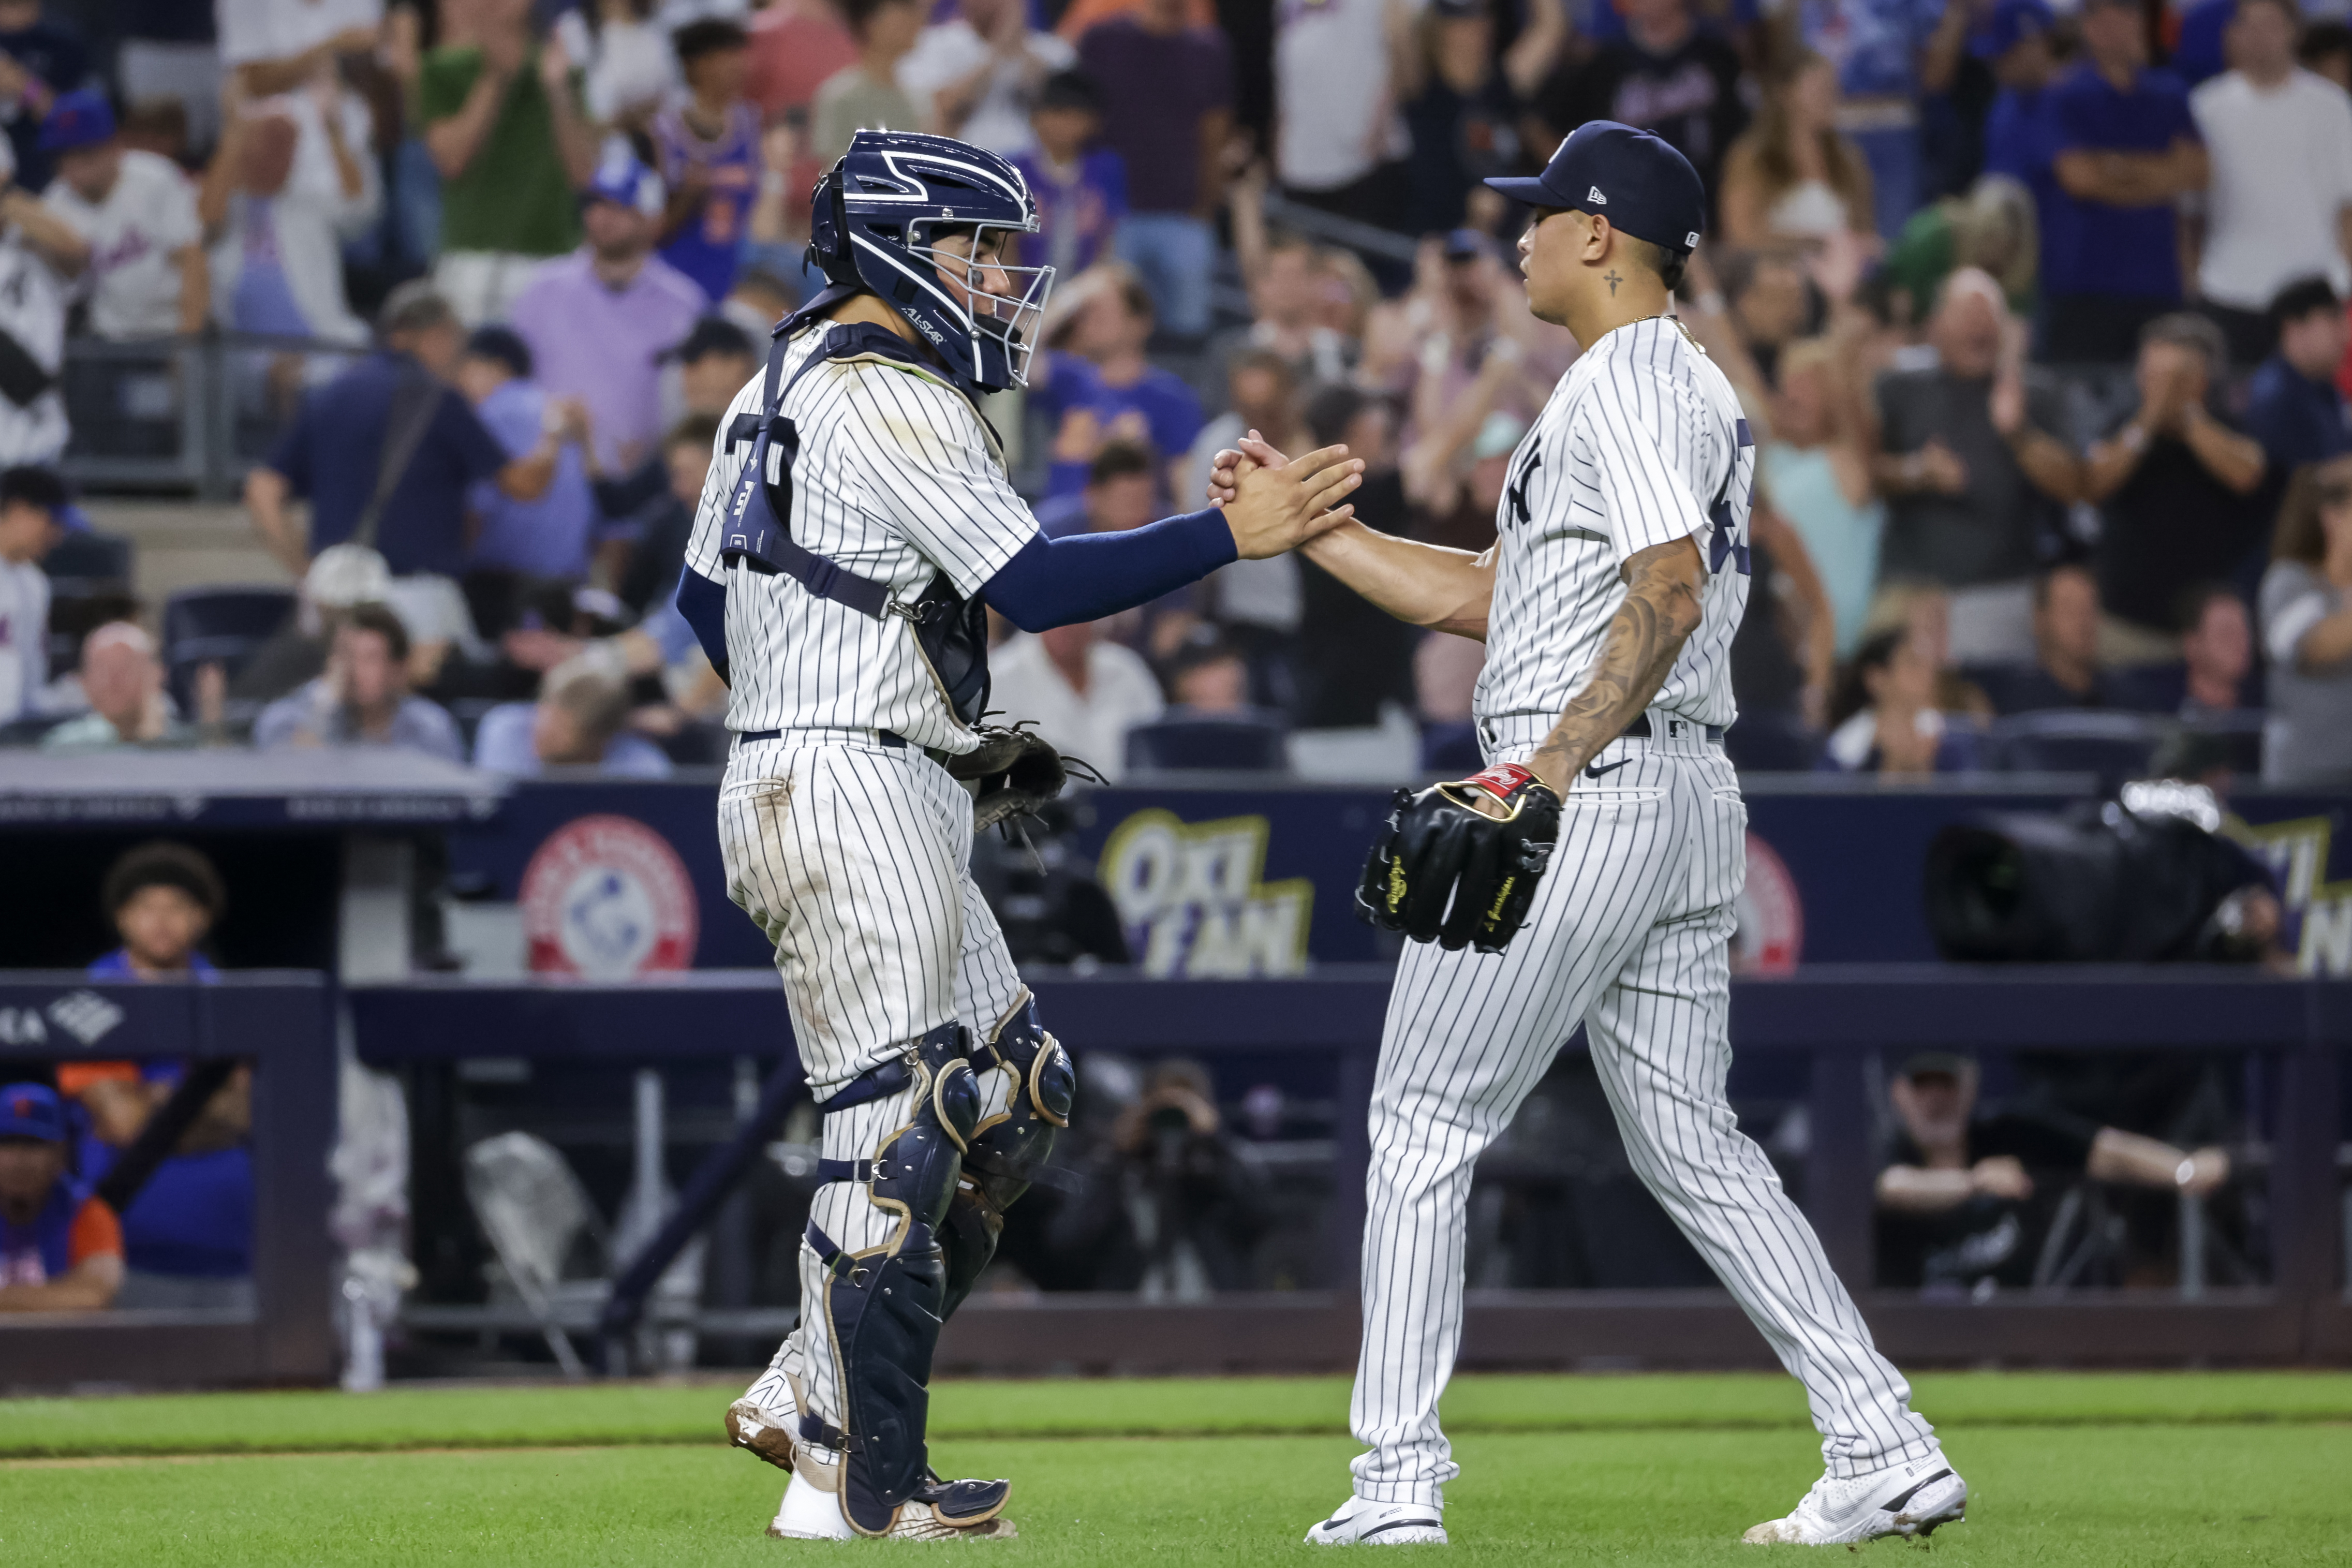 Ron Marinaccio scoreless in MLB debut with Yankees